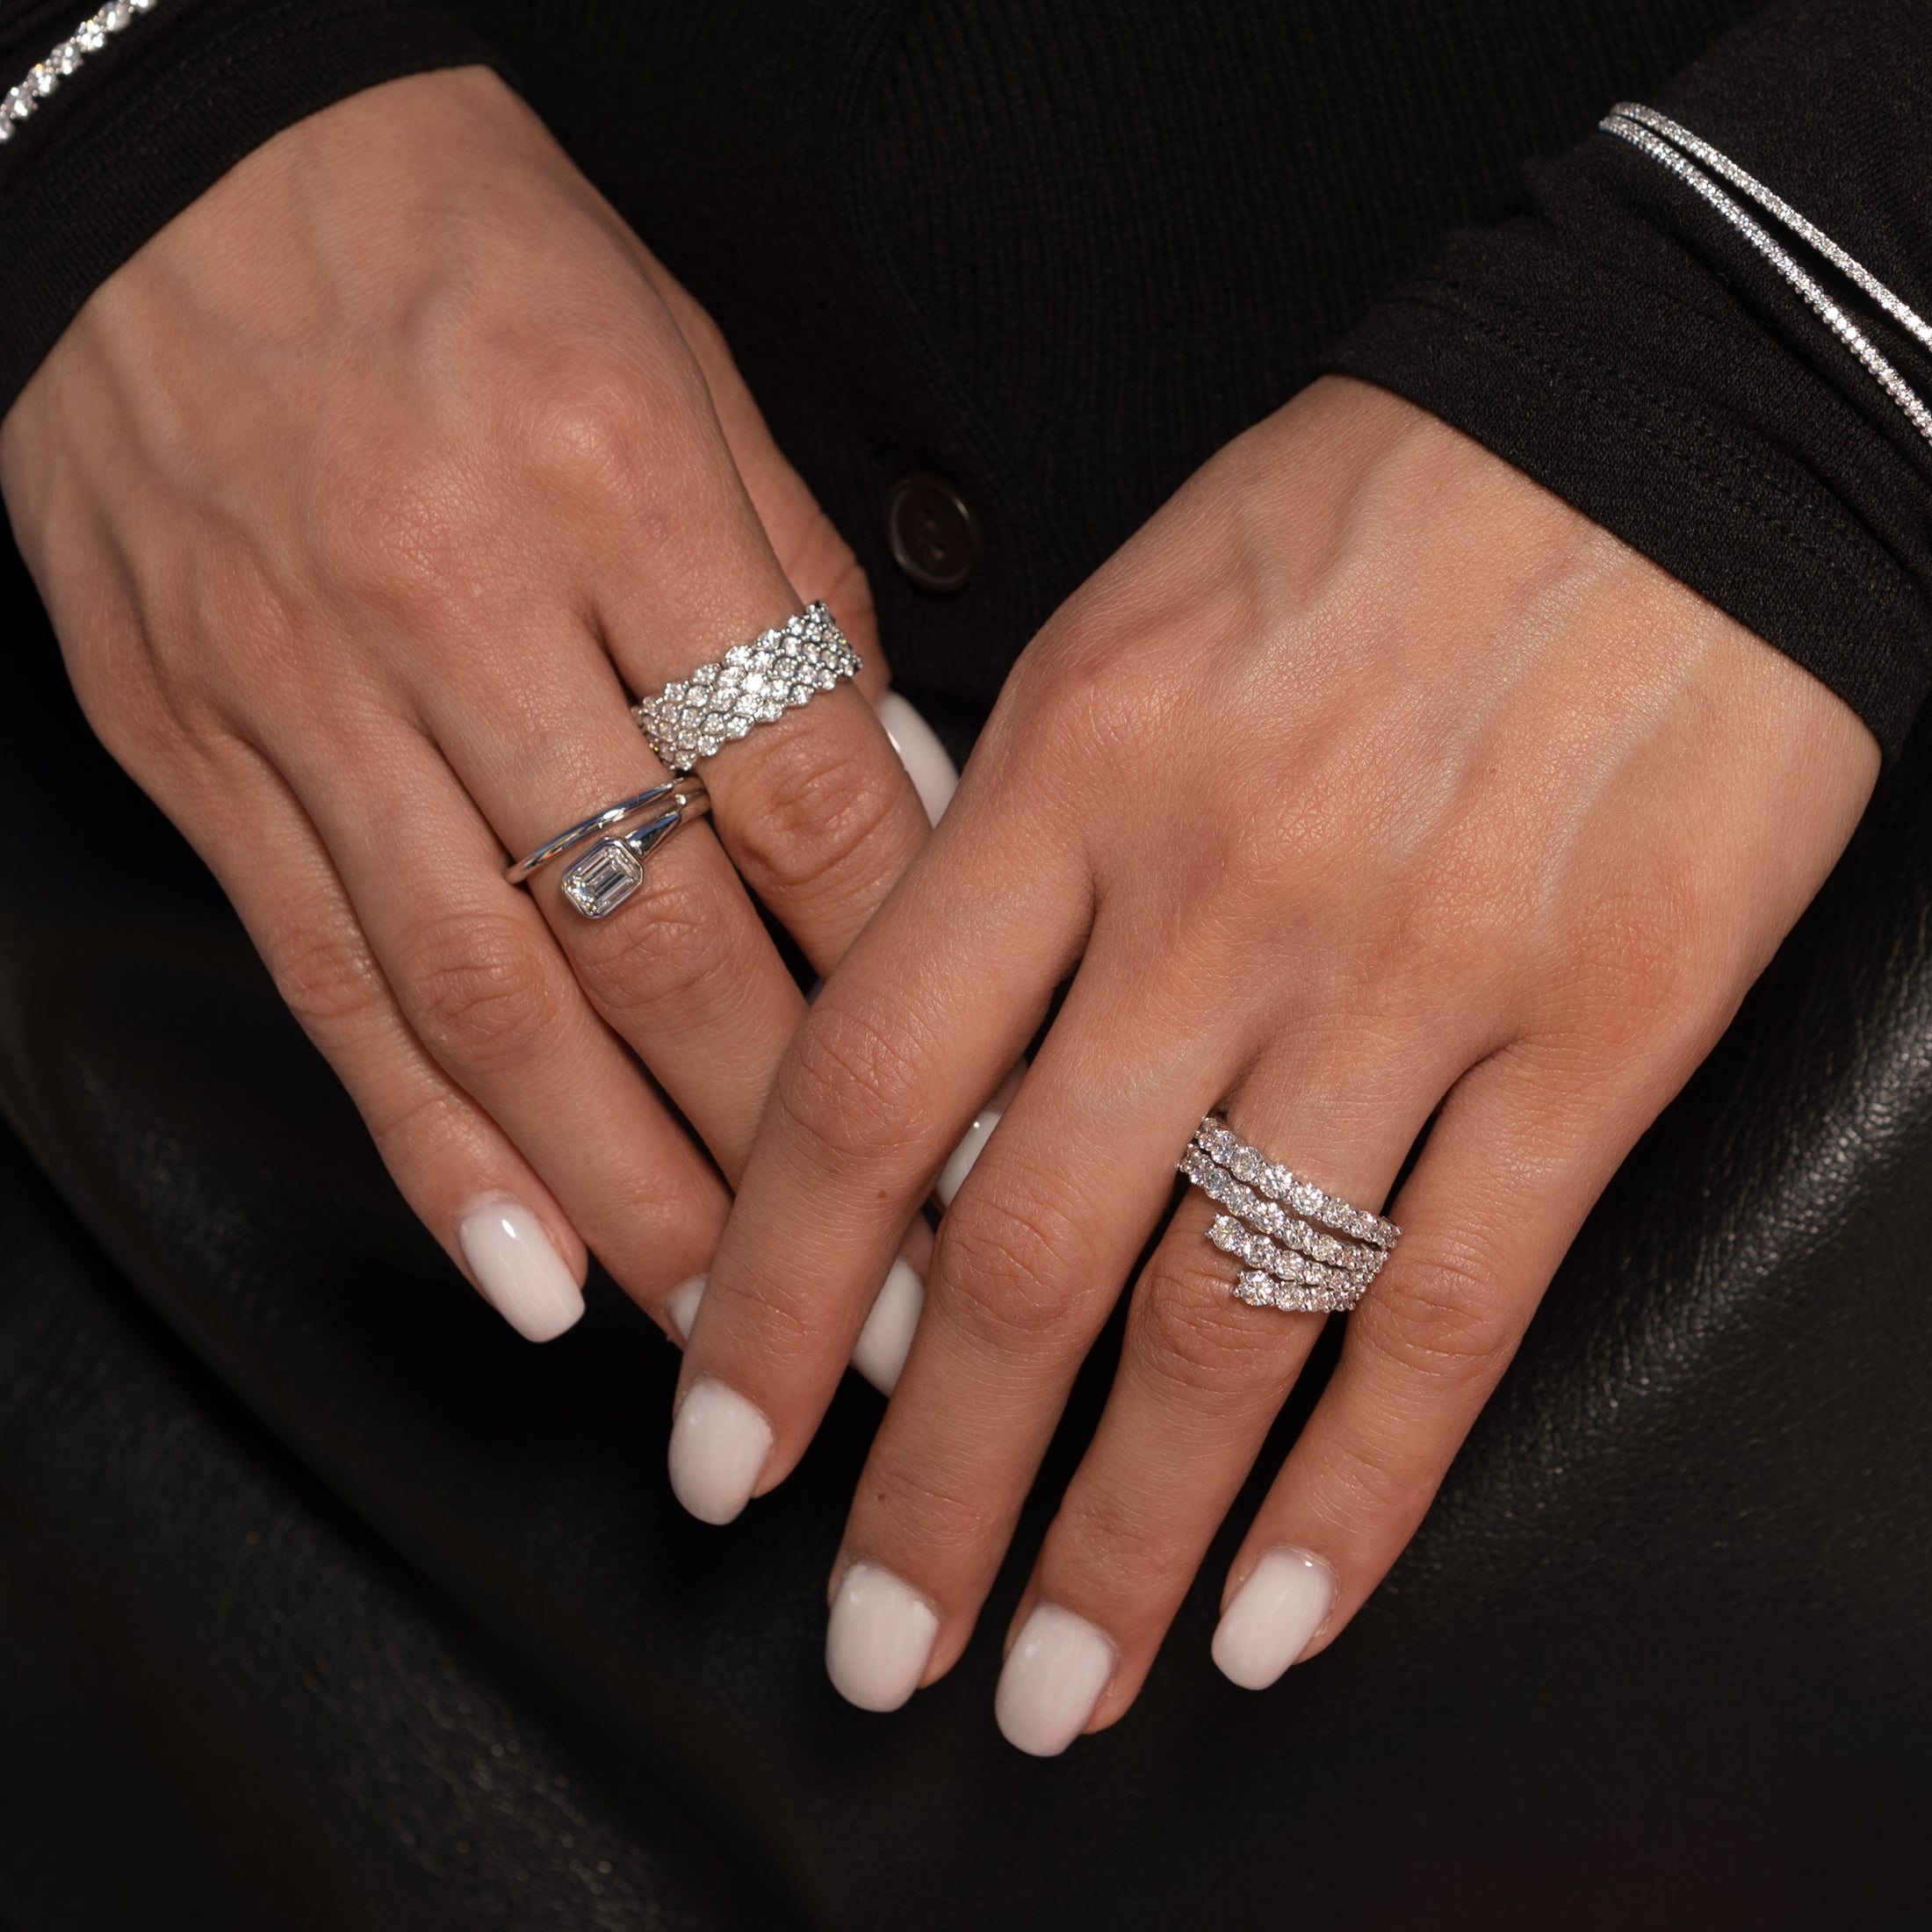 18 Karat White Gold Diamond Cascading Ring